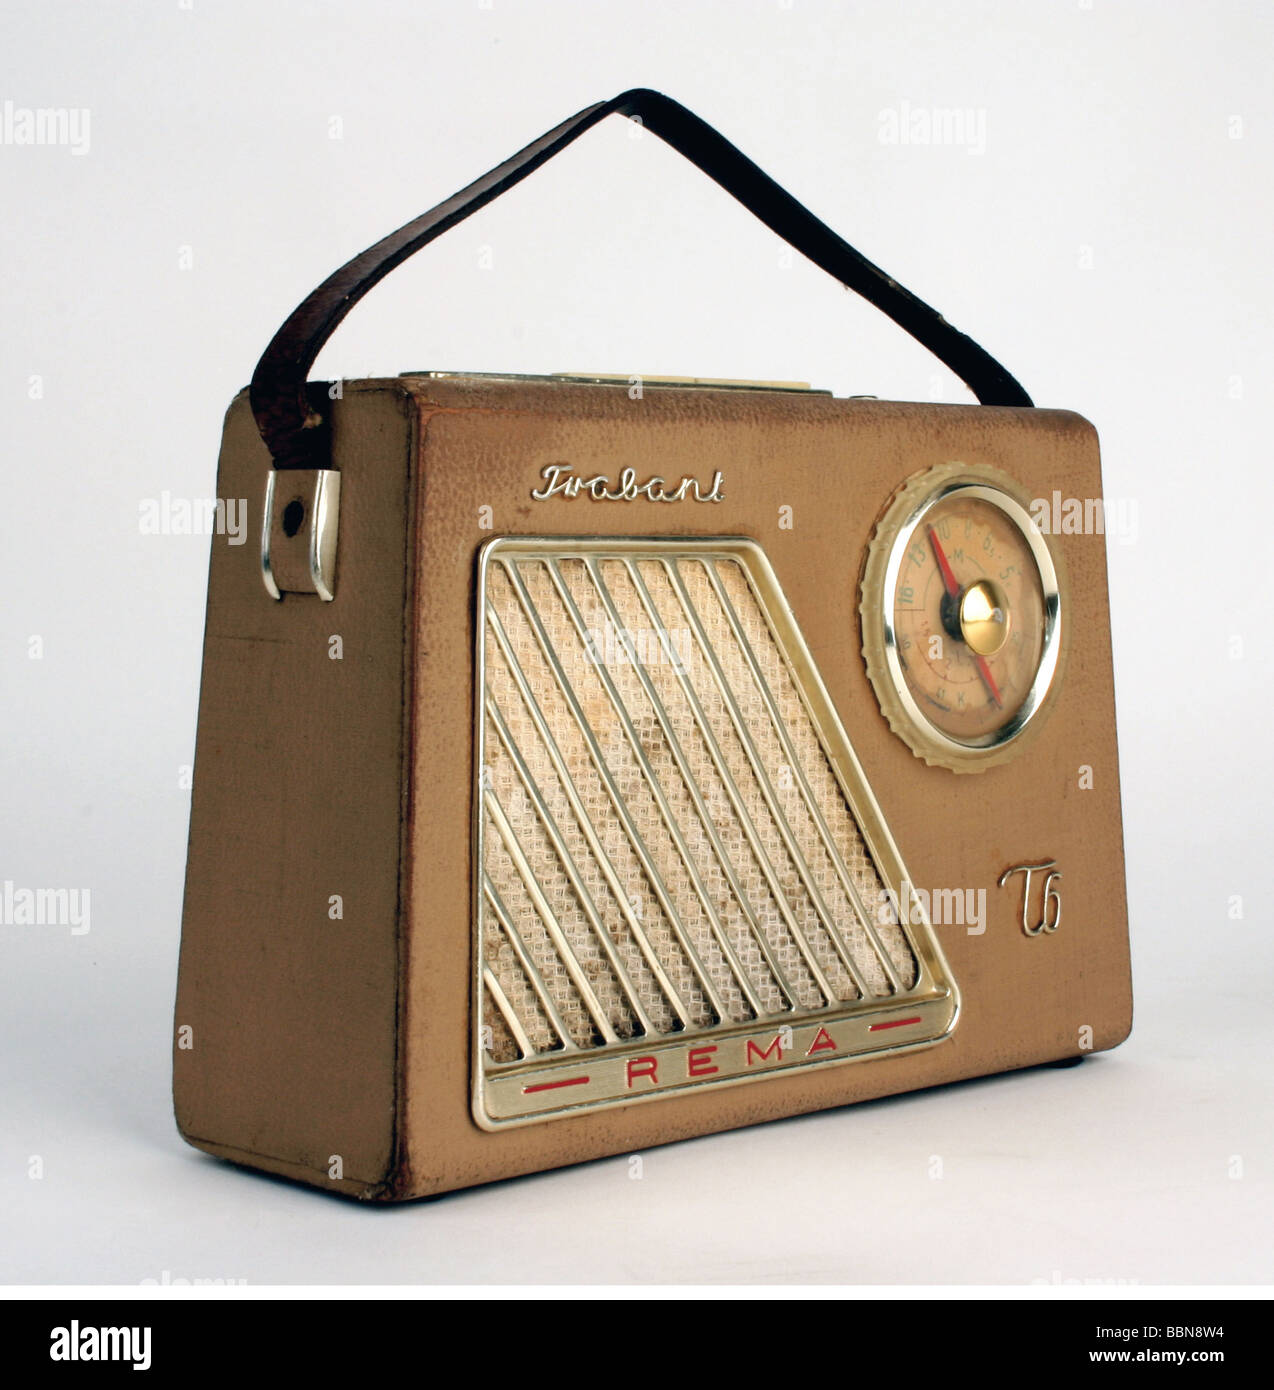 broadcast, radio, radio sets, portable radio Rema Trabant T6, made by VEB  REMA Rundfunktechnik Stollberg, GDR, 1960/1961, historic, historical, 20th  century, East-Germany, East Germany, DDR, radio set, technic, design by  Heinz Breitfeld,